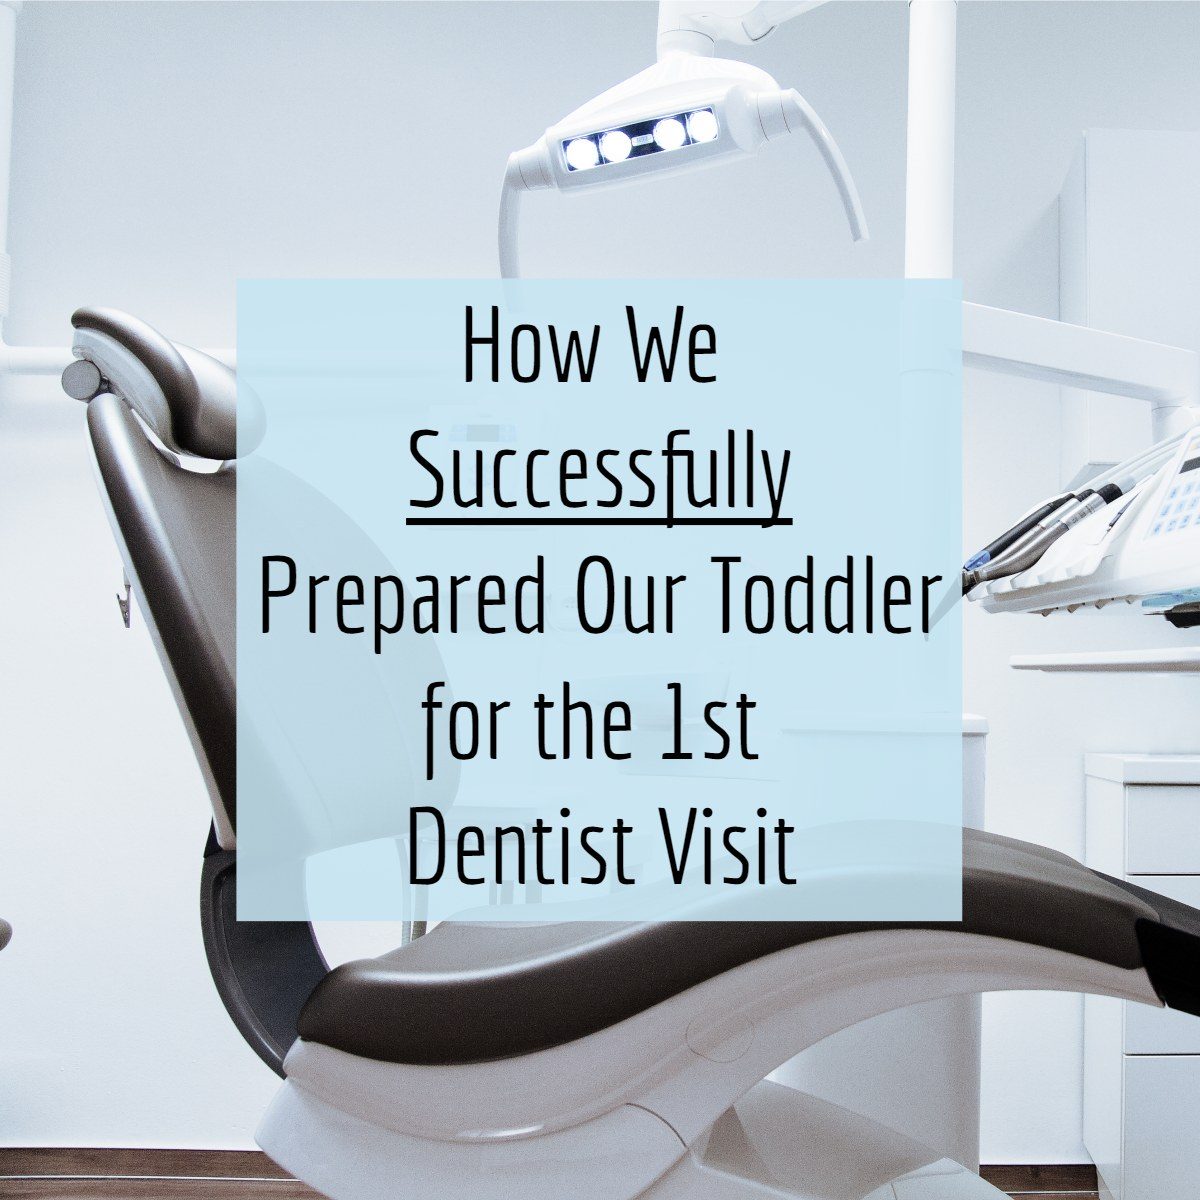 How We Prepared Toddler for Dentist